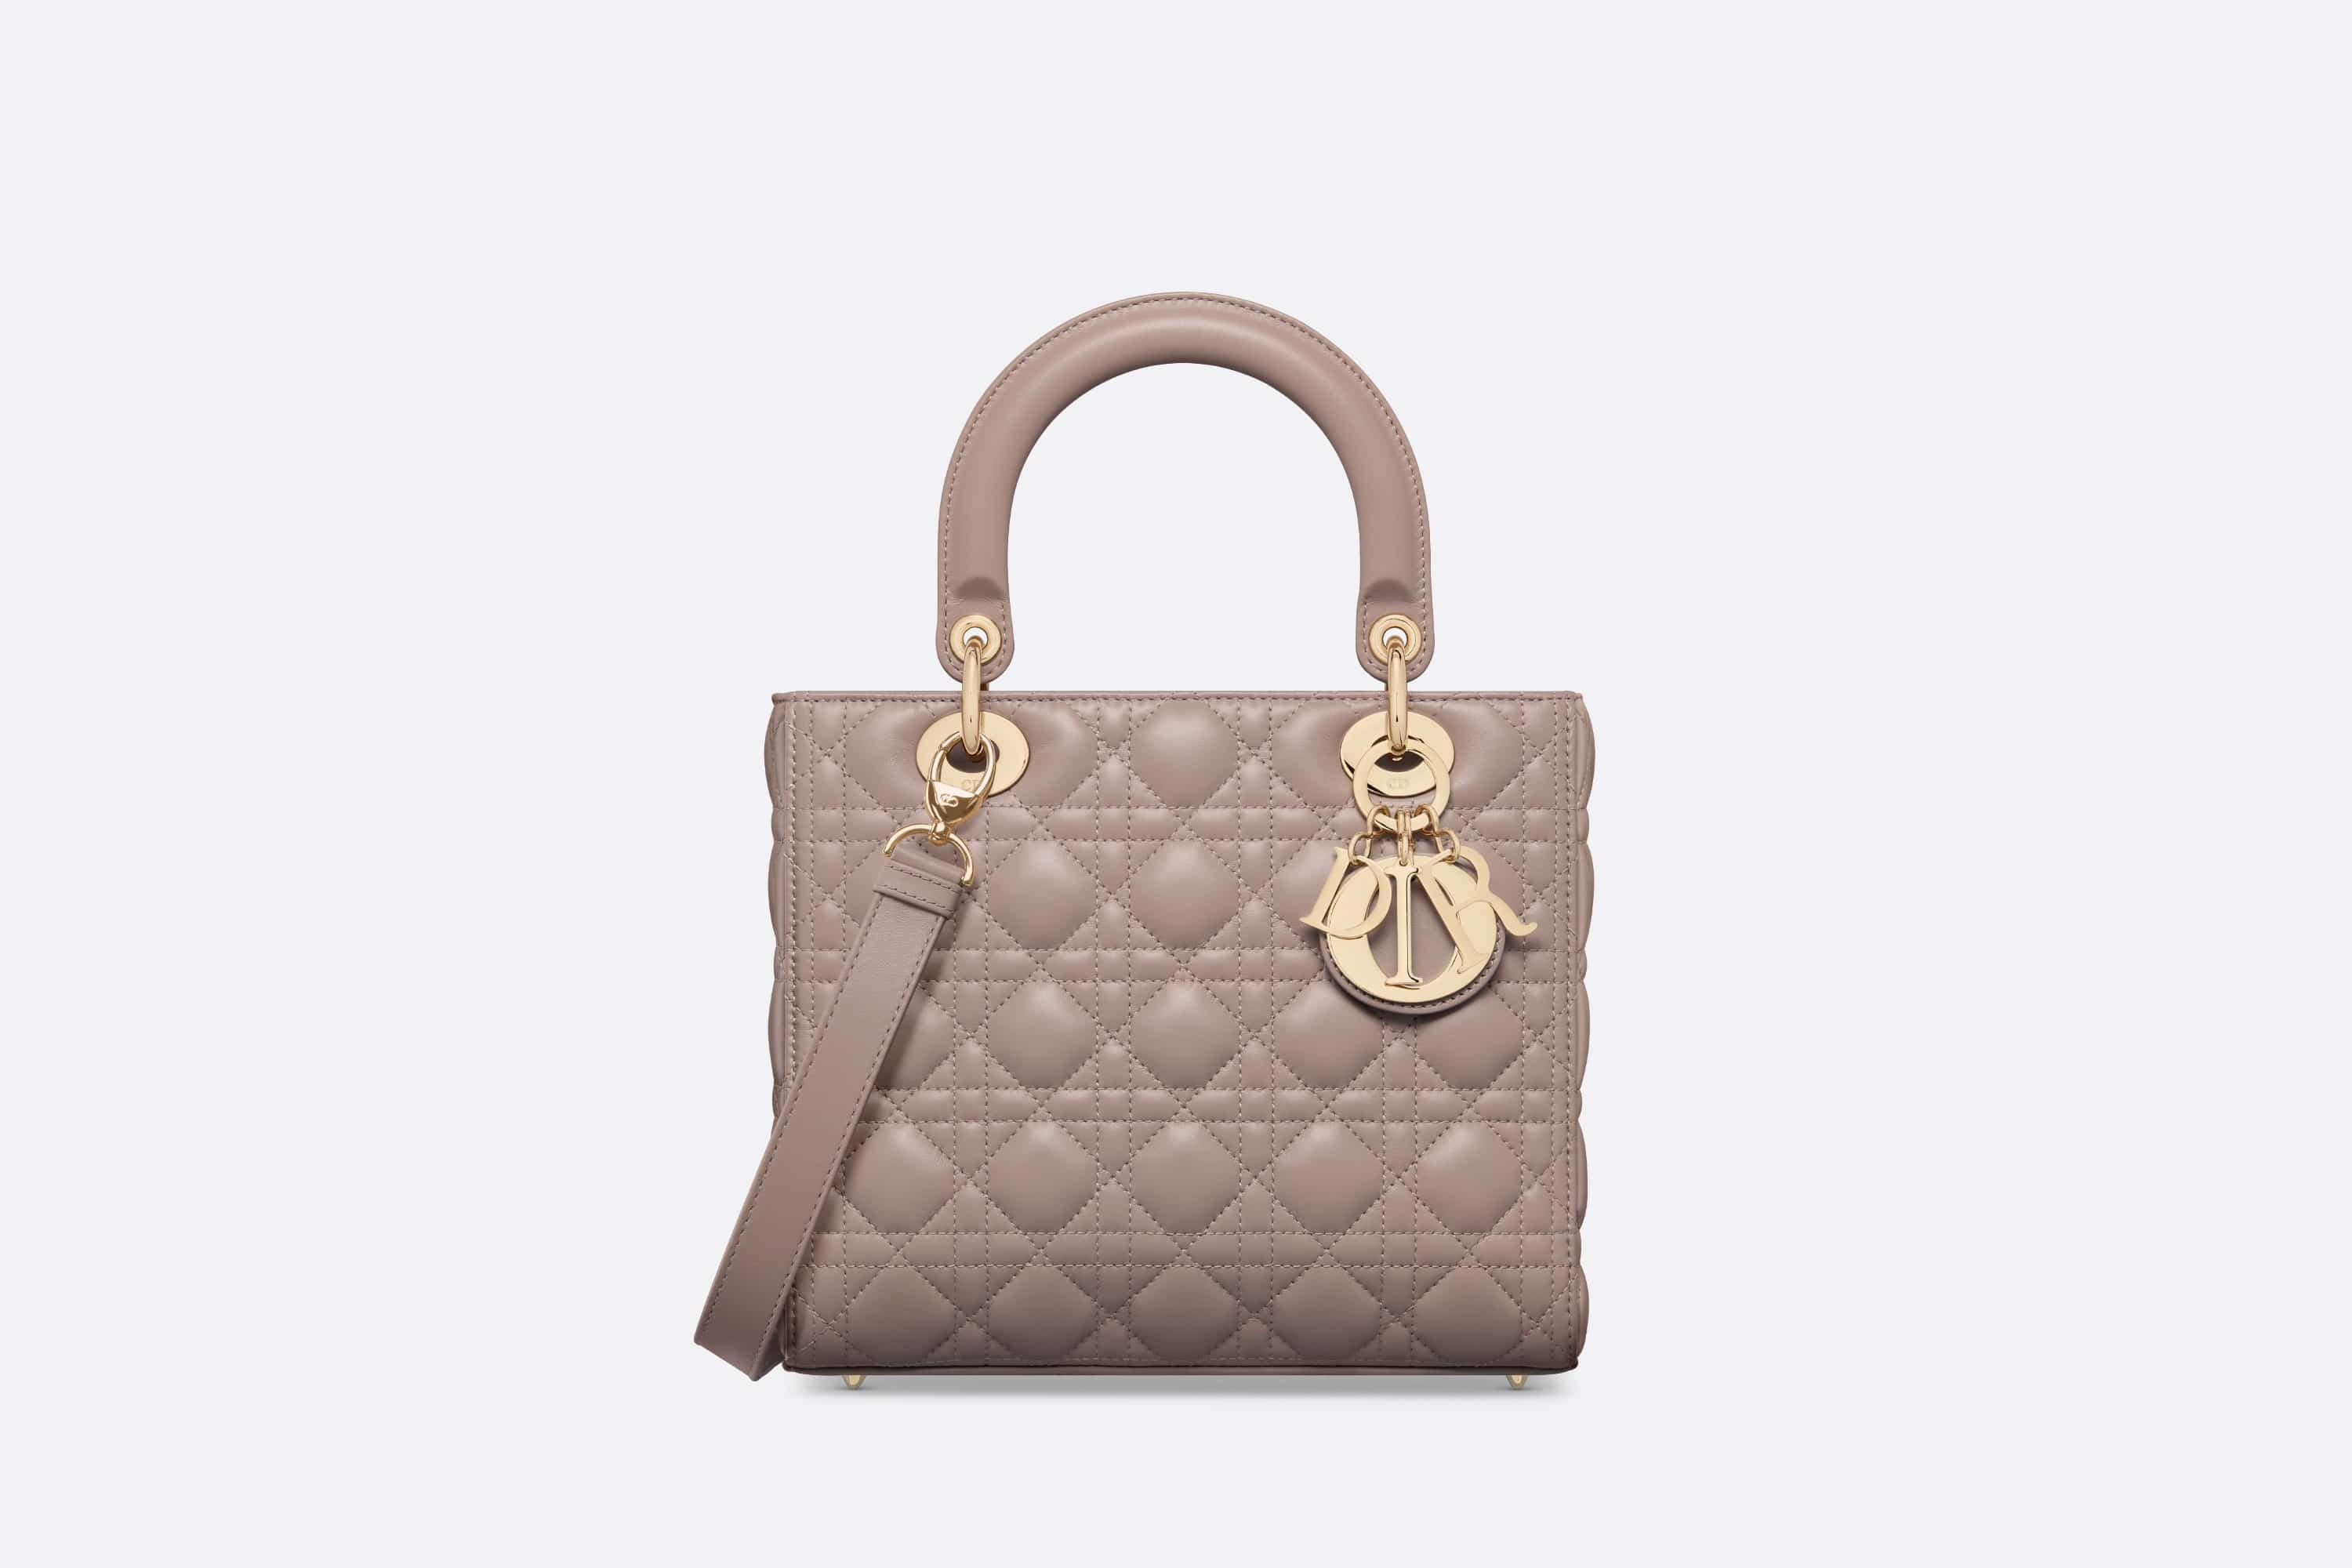 Medium Lady Dior Bag - 1